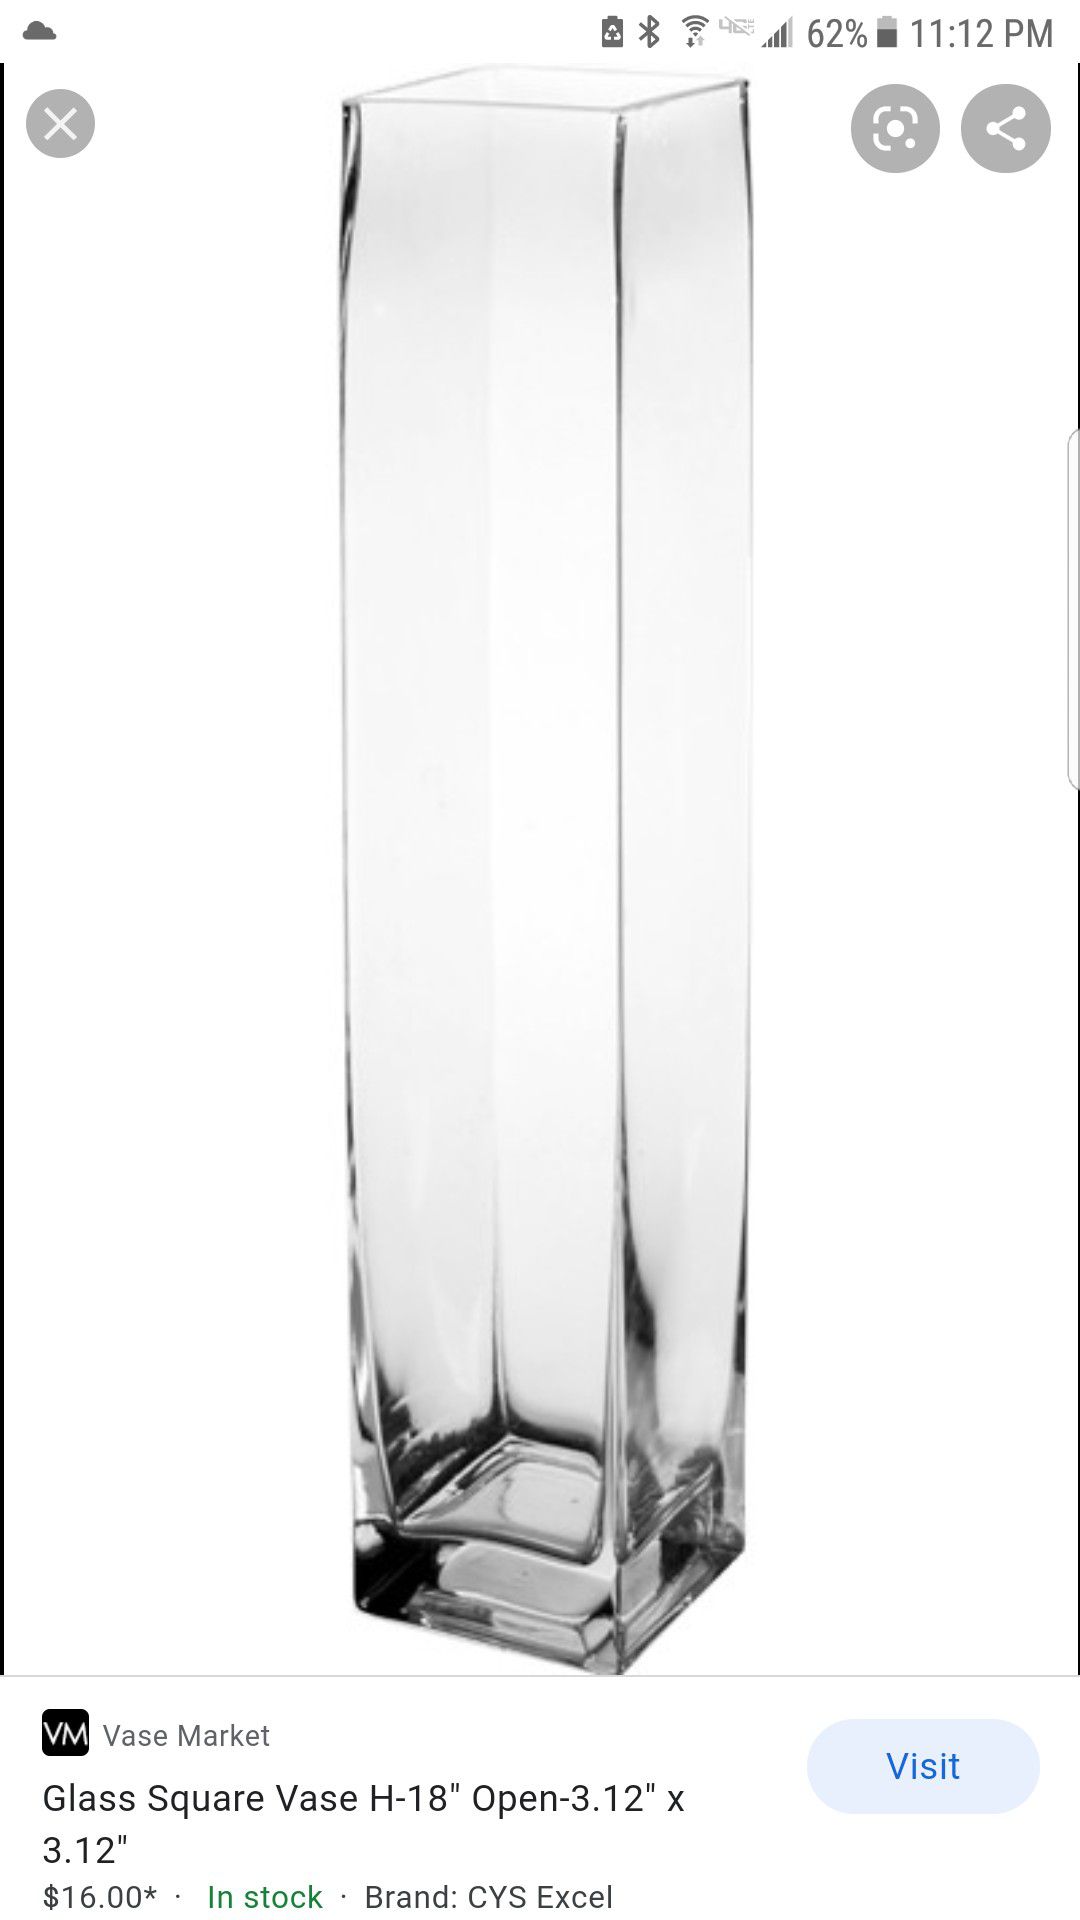 Tall glass vases